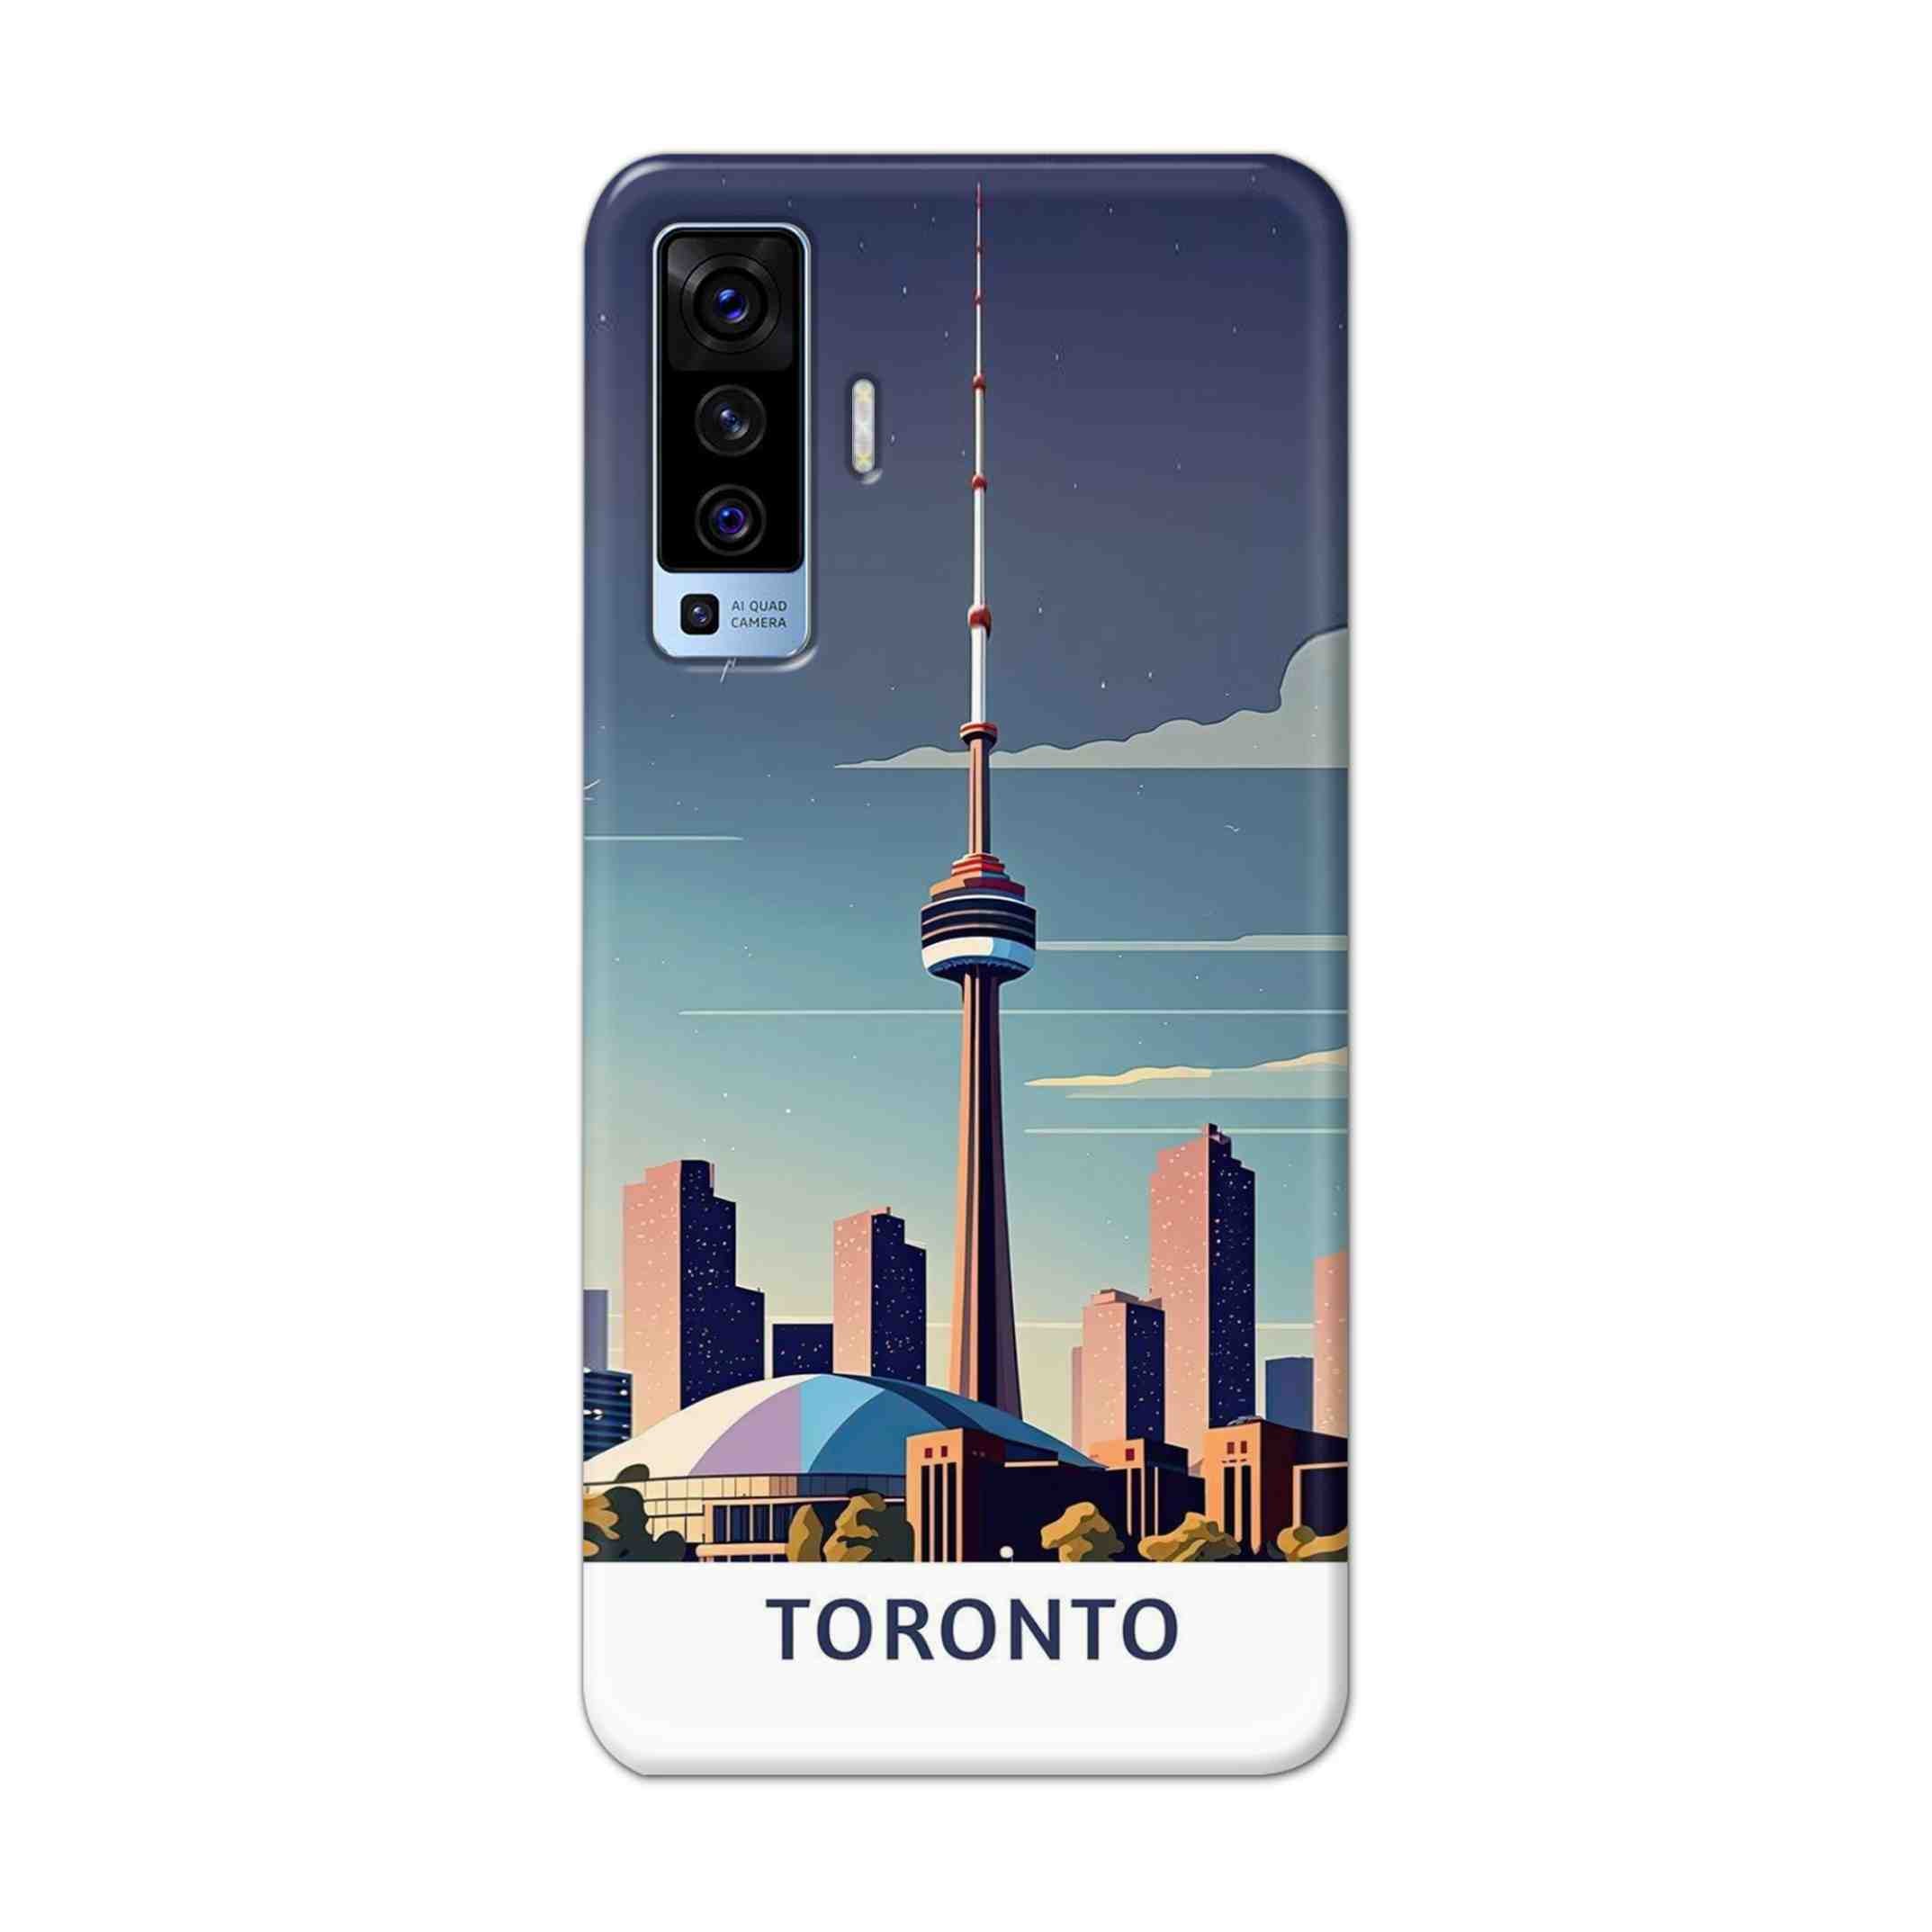 Buy Toronto Hard Back Mobile Phone Case Cover For Vivo X50 Online